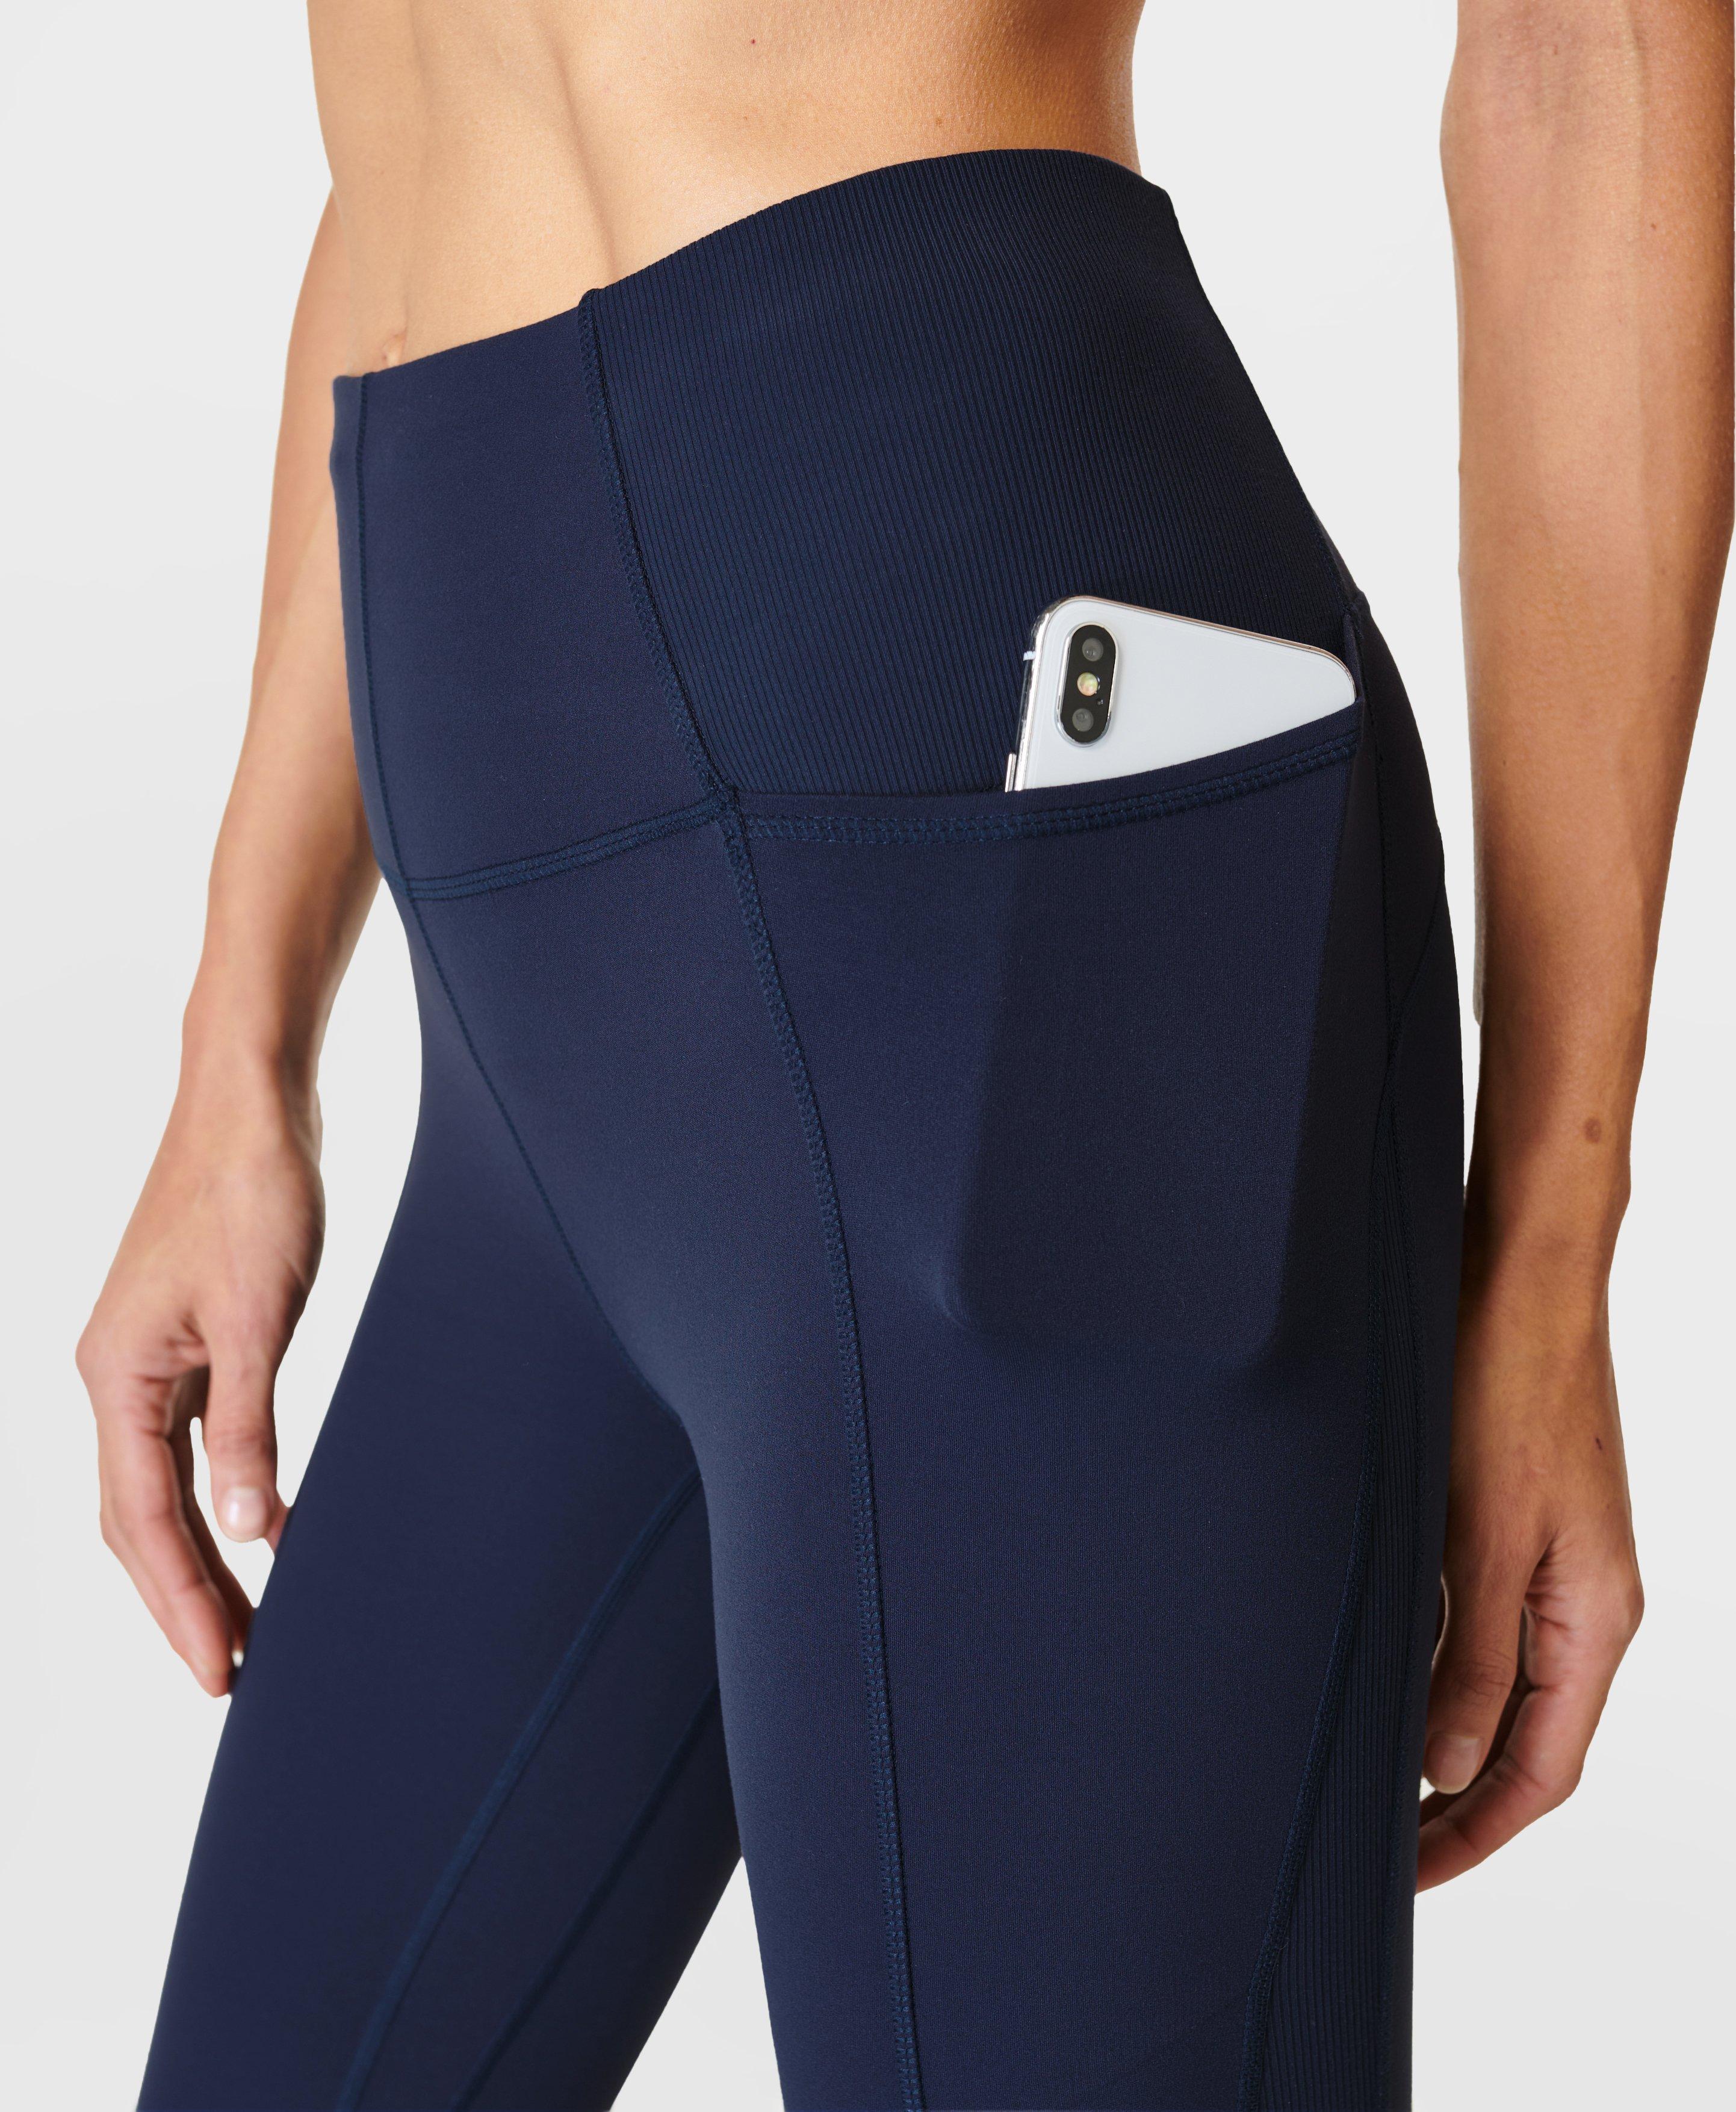 Sweaty Betty Super soft 7/8 yoga leggings blue line flow print 8-10